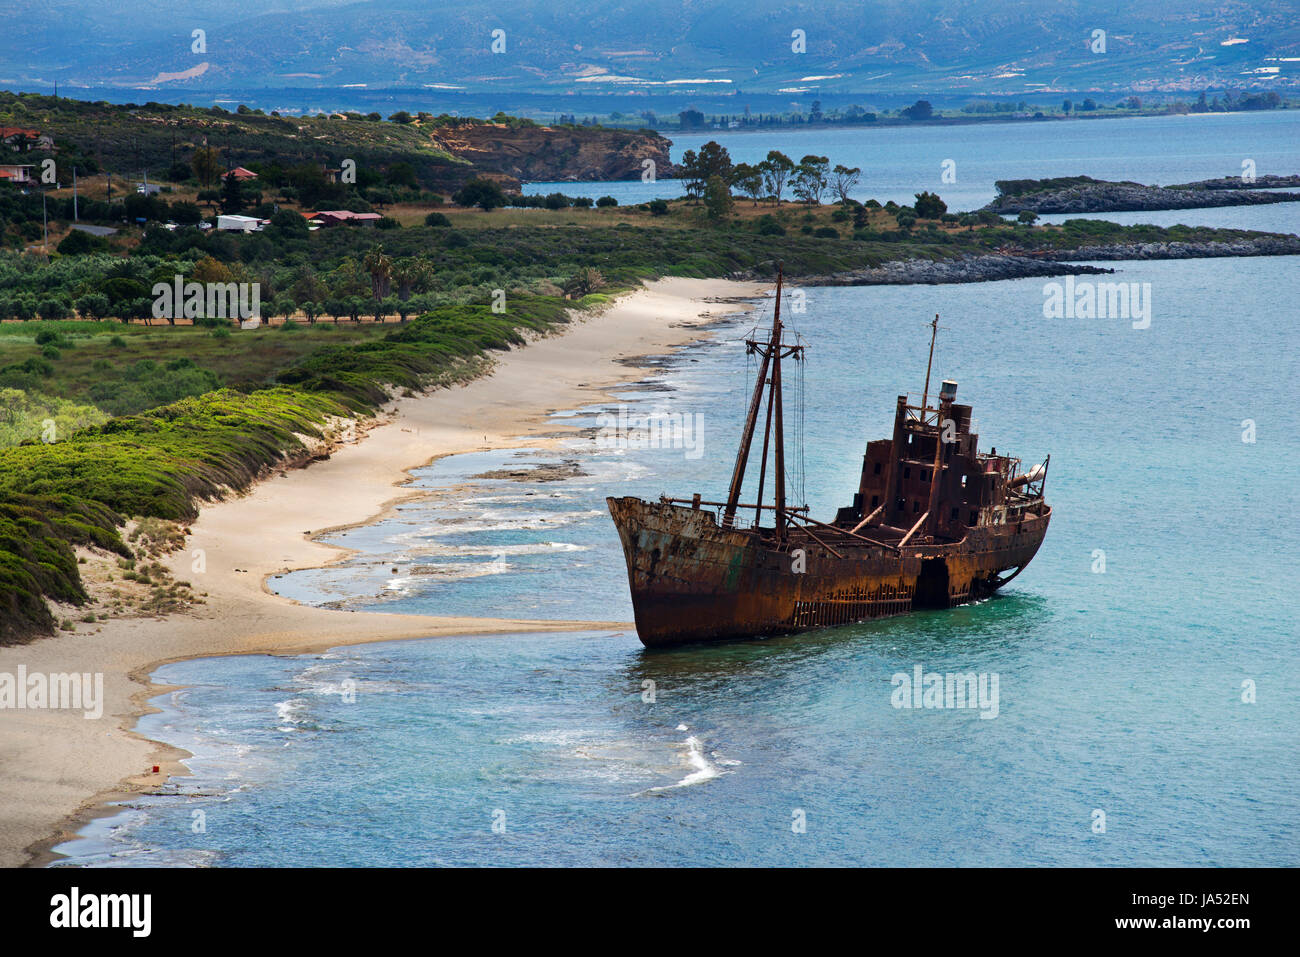 Griechenland, Strand, Meer, Strand, Meer, Rusty, Schiffbruch, Schiff, Segeln Stockfoto